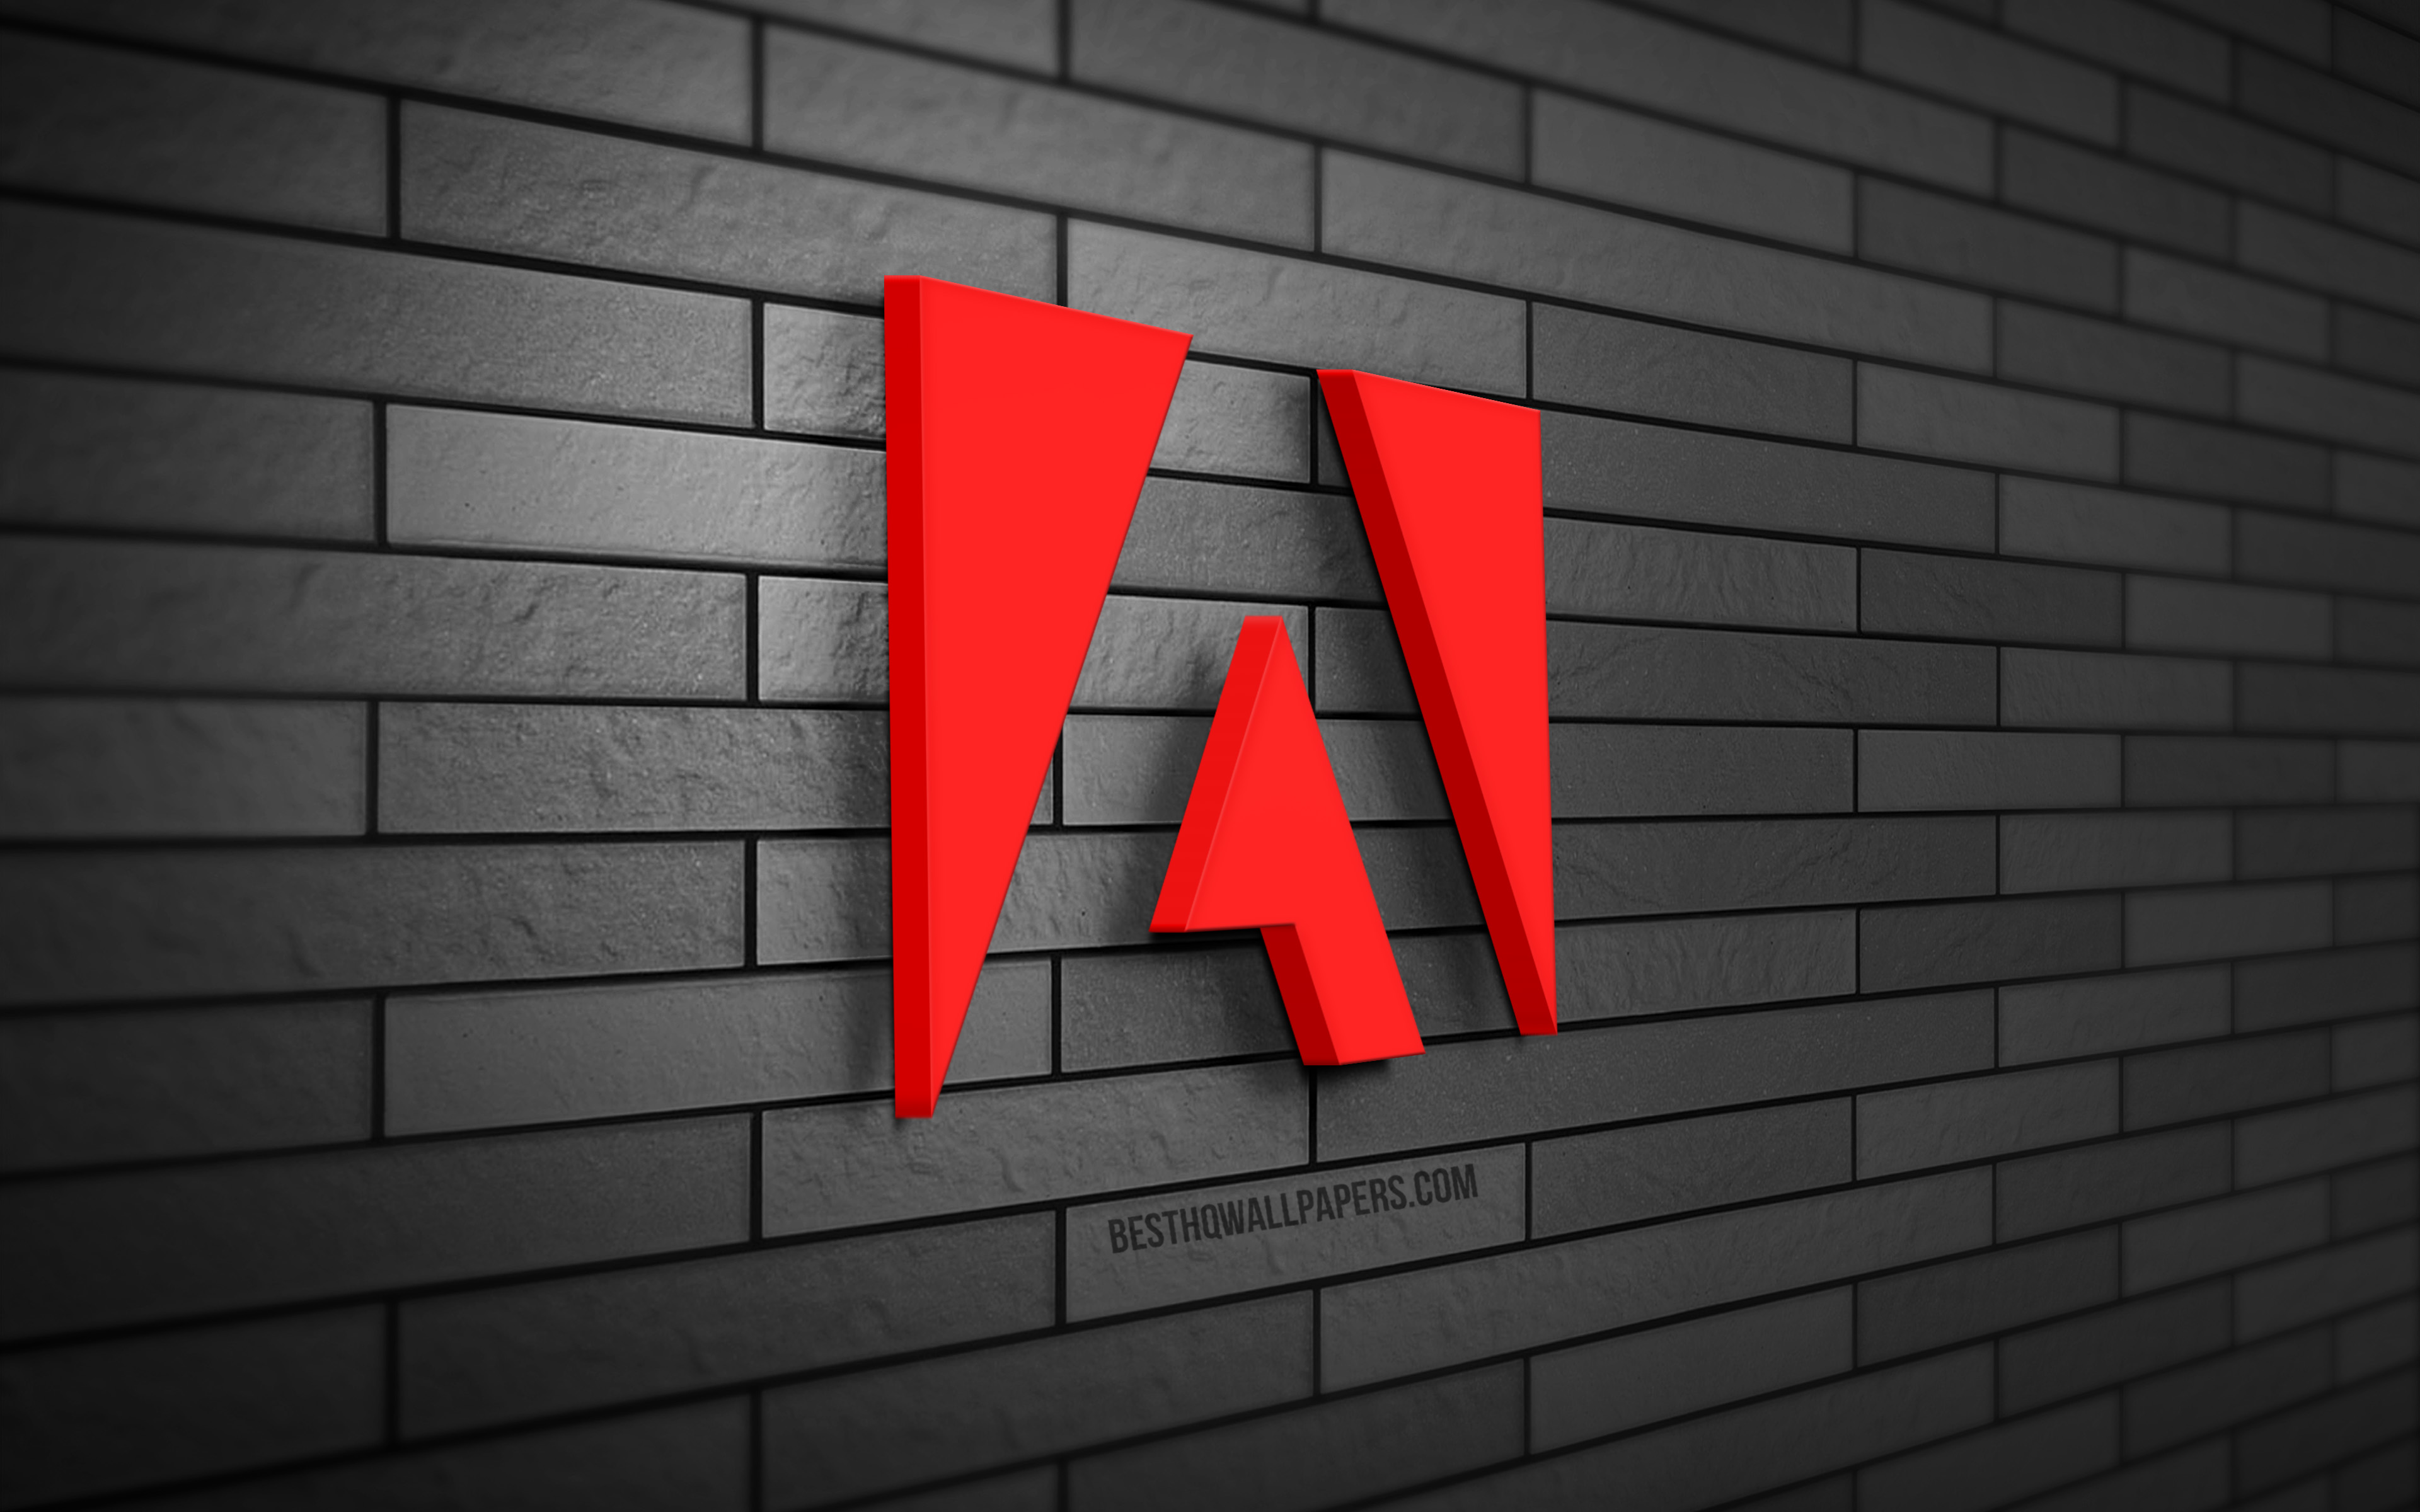 Download wallpaper Adobe 3D logo, 4K, gray brickwall, creative, brands, Adobe logo, 3D art, Adobe for desktop with resolution 3840x2400. High Quality HD picture wallpaper